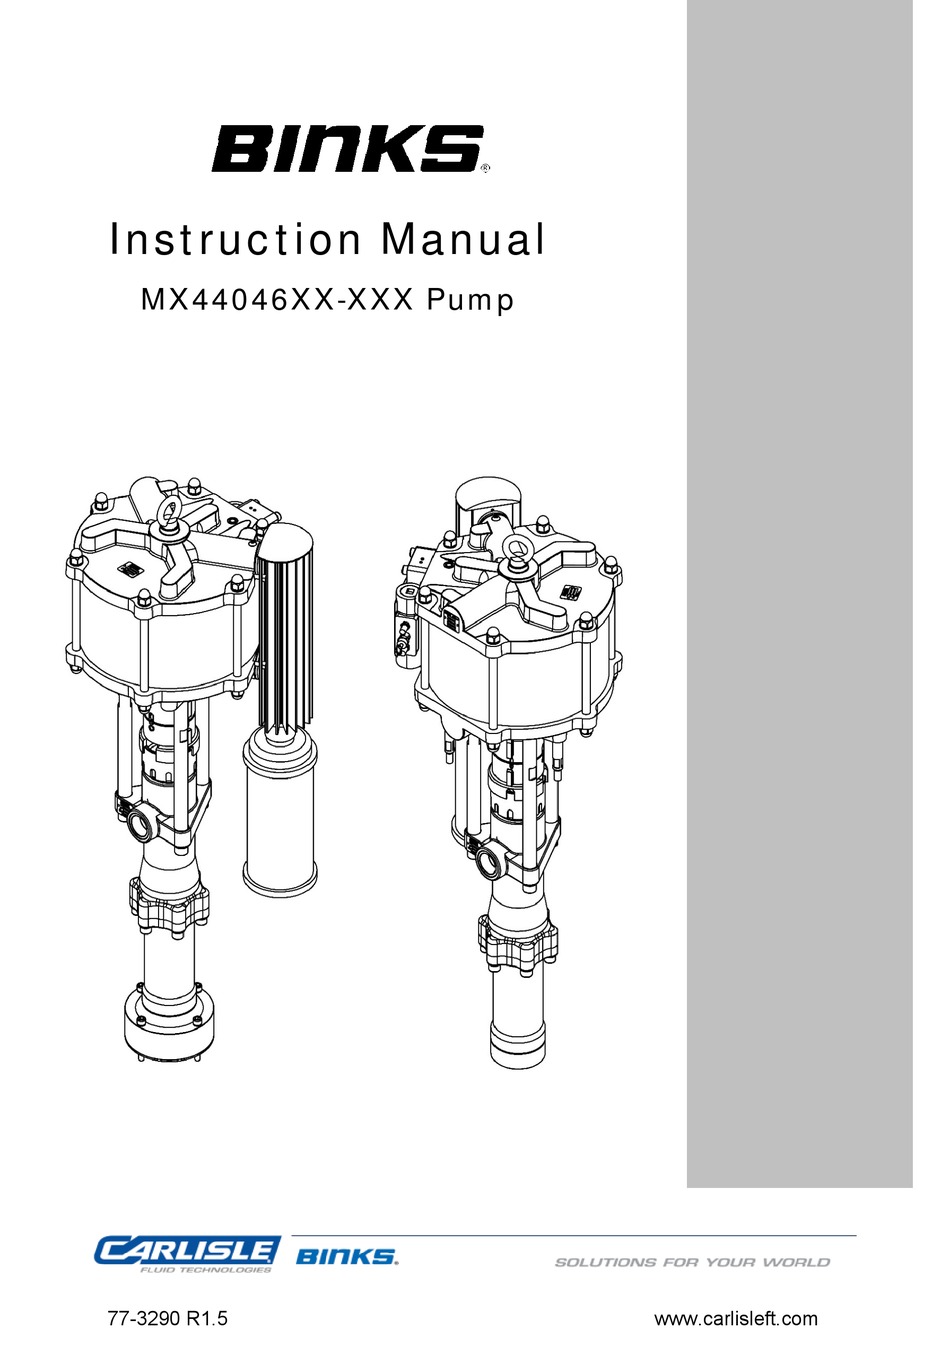 CARLISLE BINKS MX44046 SERIES INSTRUCTION MANUAL Pdf Download | ManualsLib